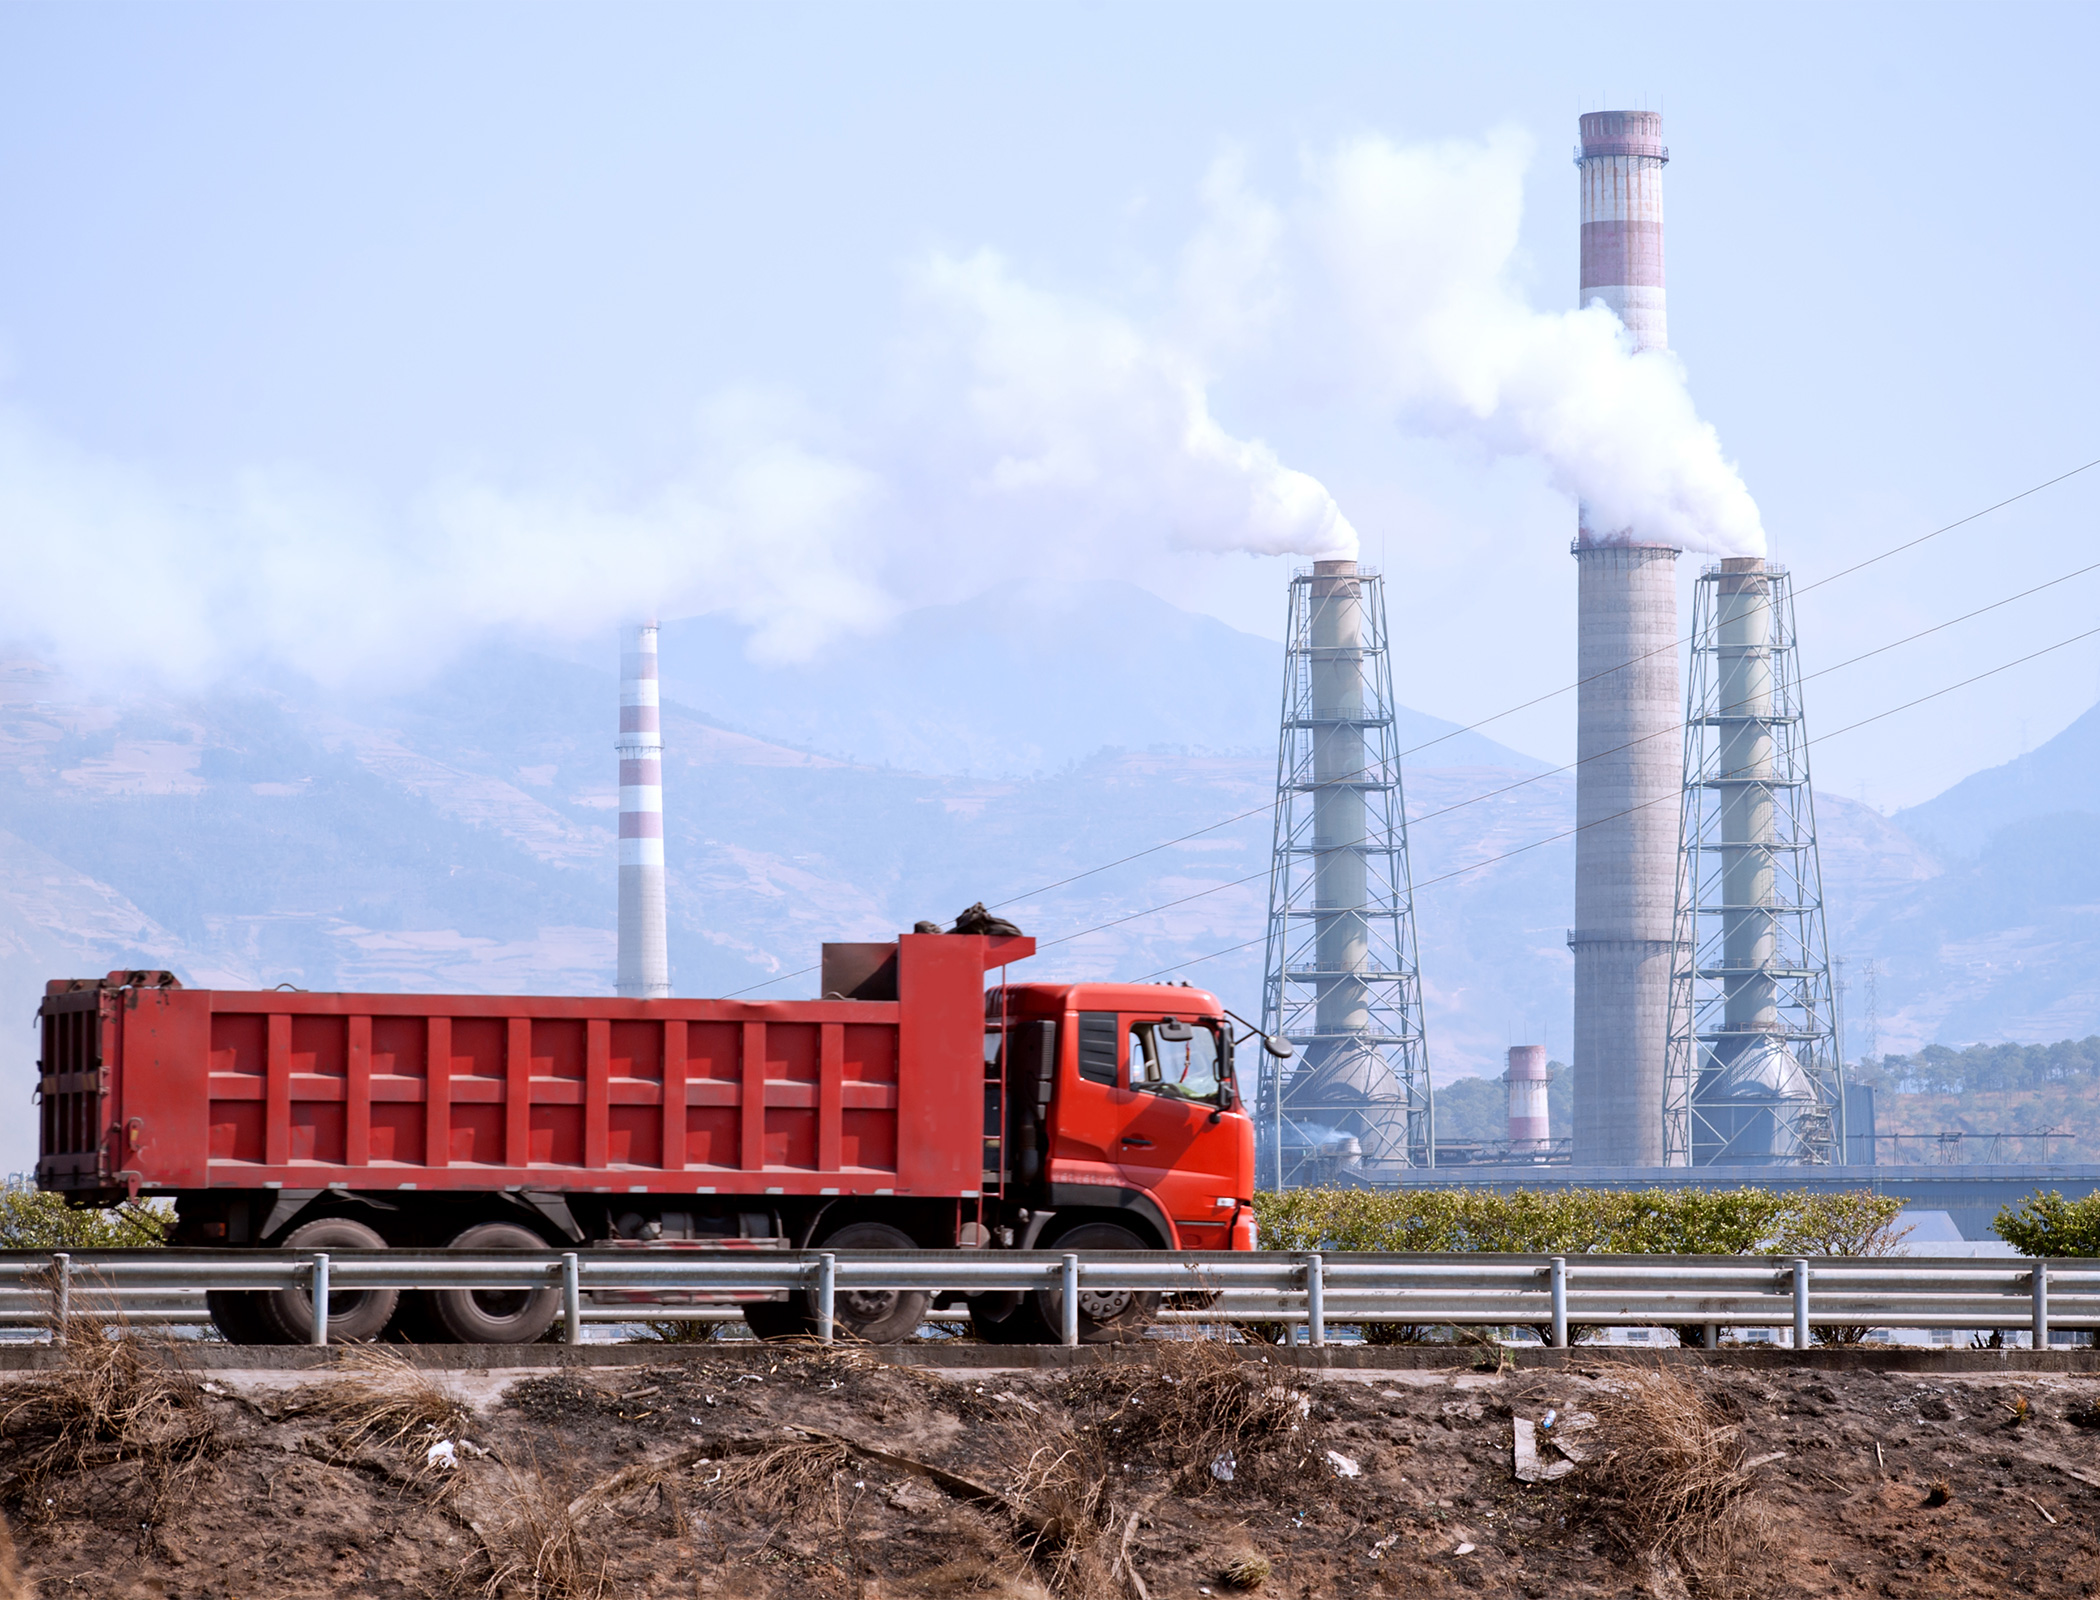 China still not at peak emissions despite recent declines, study finds